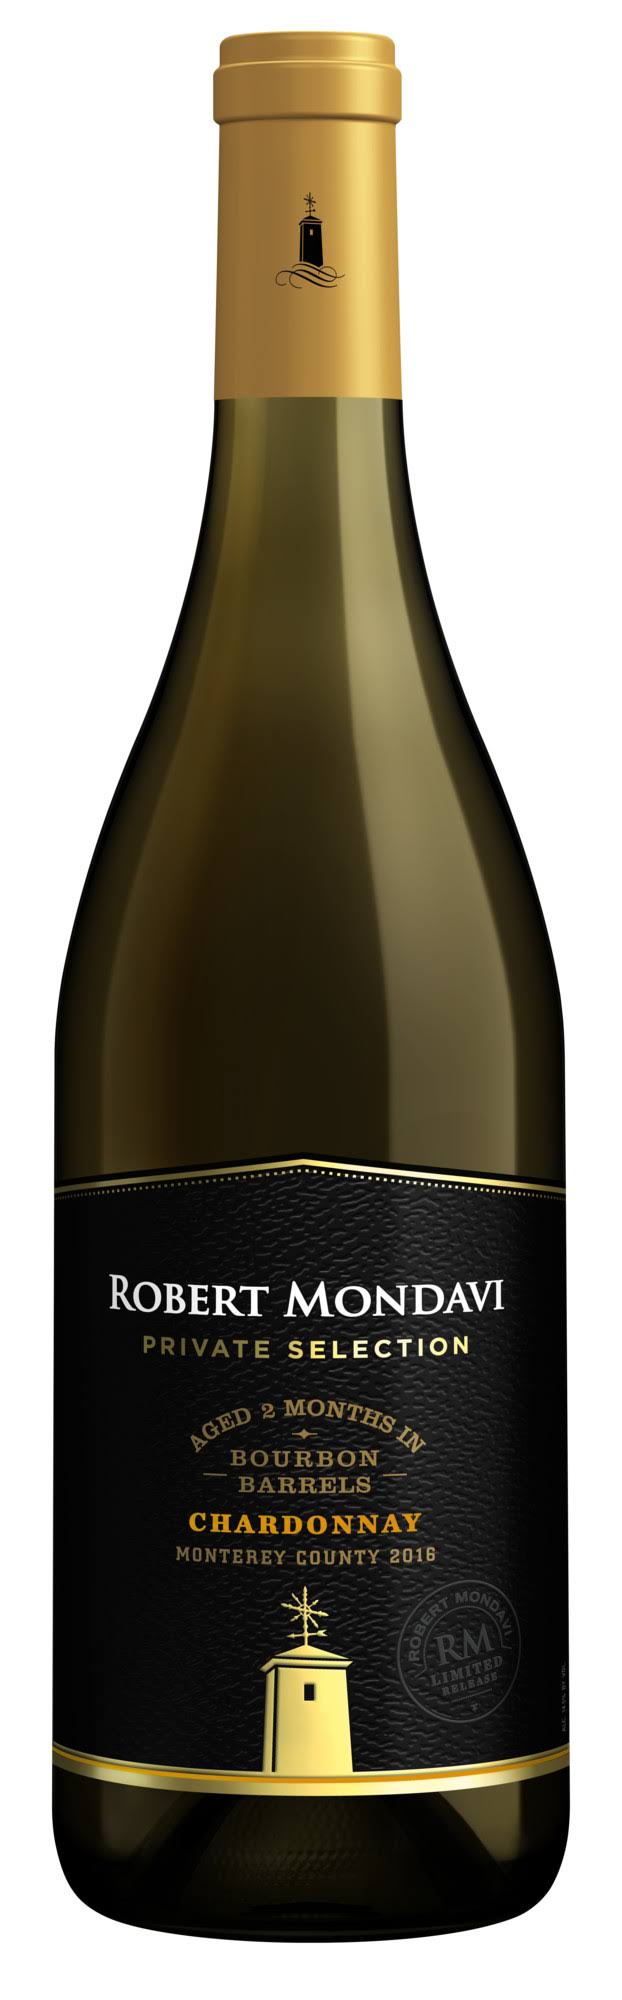 Robert Mondavi Private Selection Chardonnay, Monterey County, 2015 - 750 ml